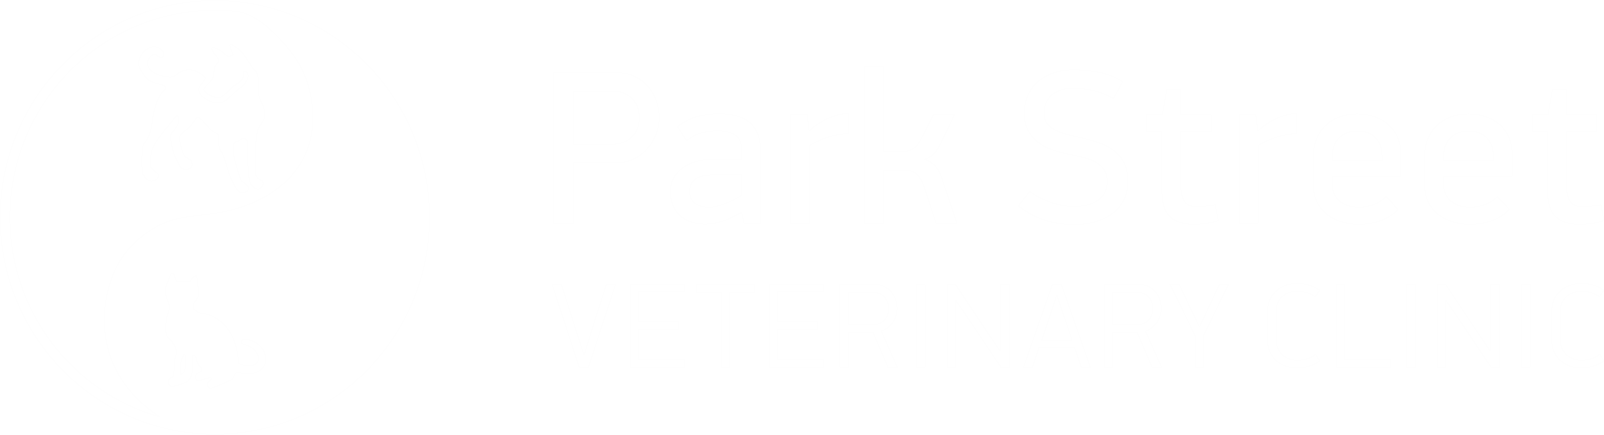 Park Street Veterinary Clinic